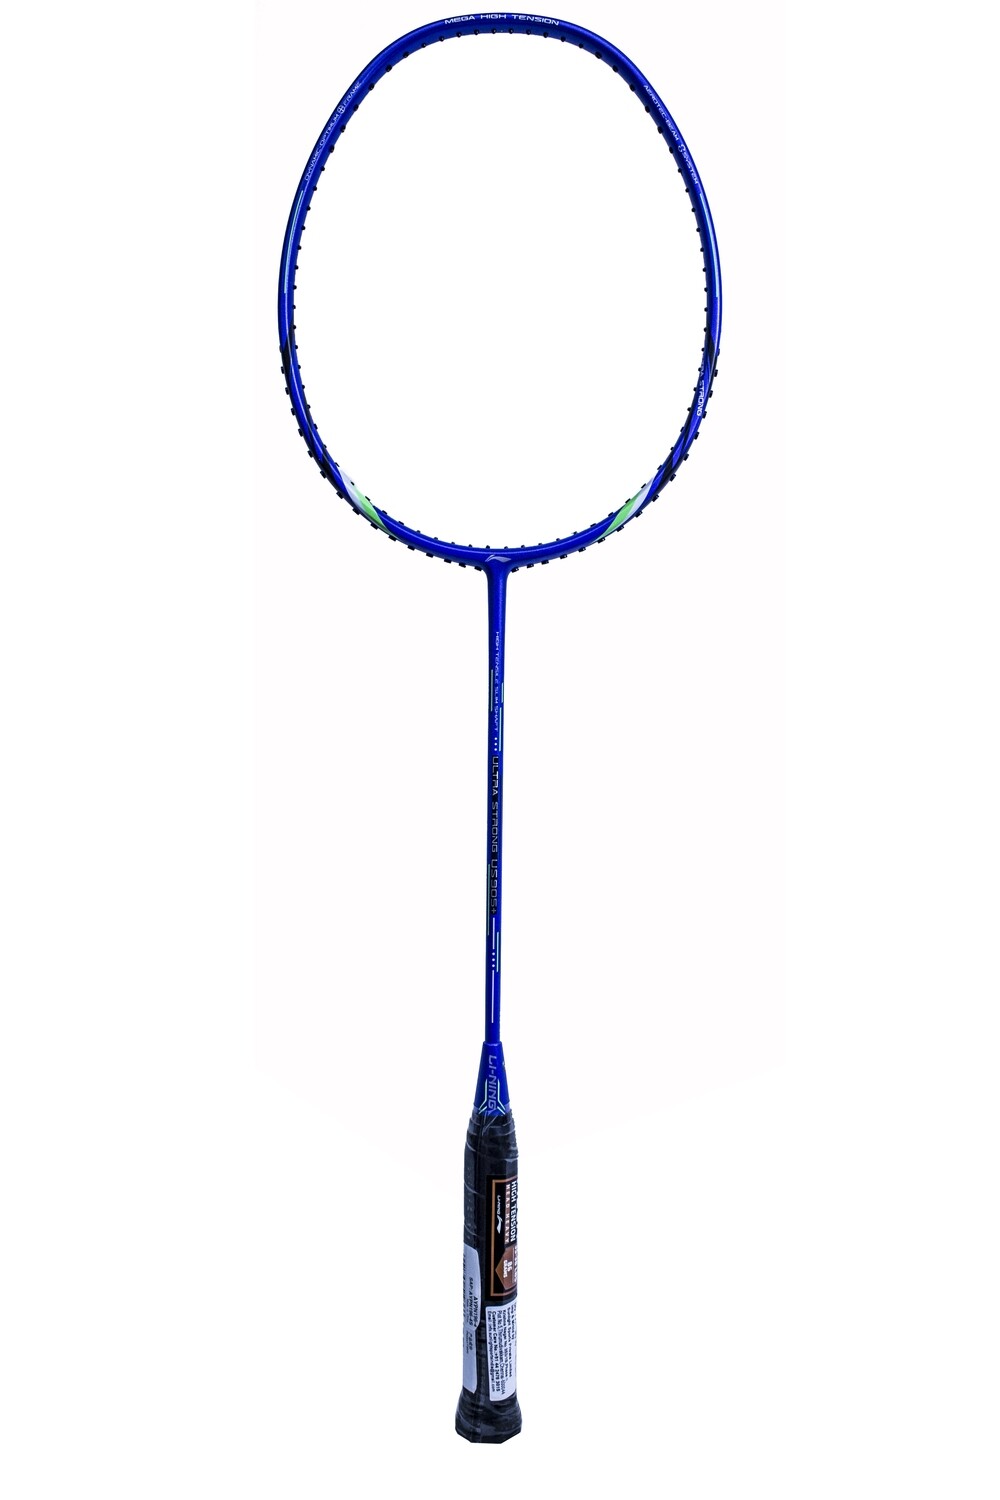 LI-NING Ultra Strong US 905+ Badminton Racquet -